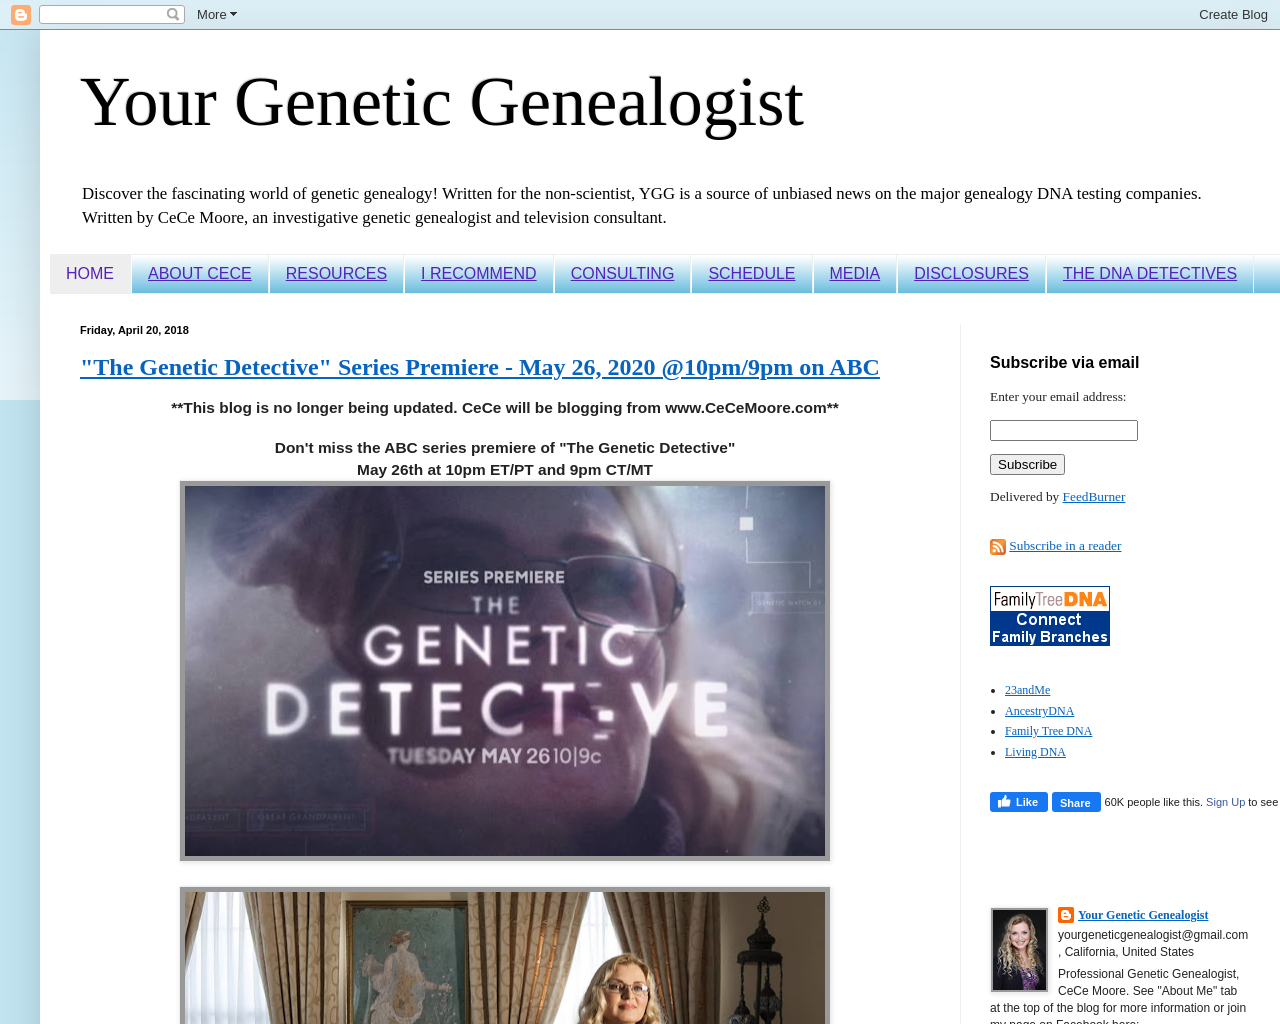 yourgeneticgenealogist.com